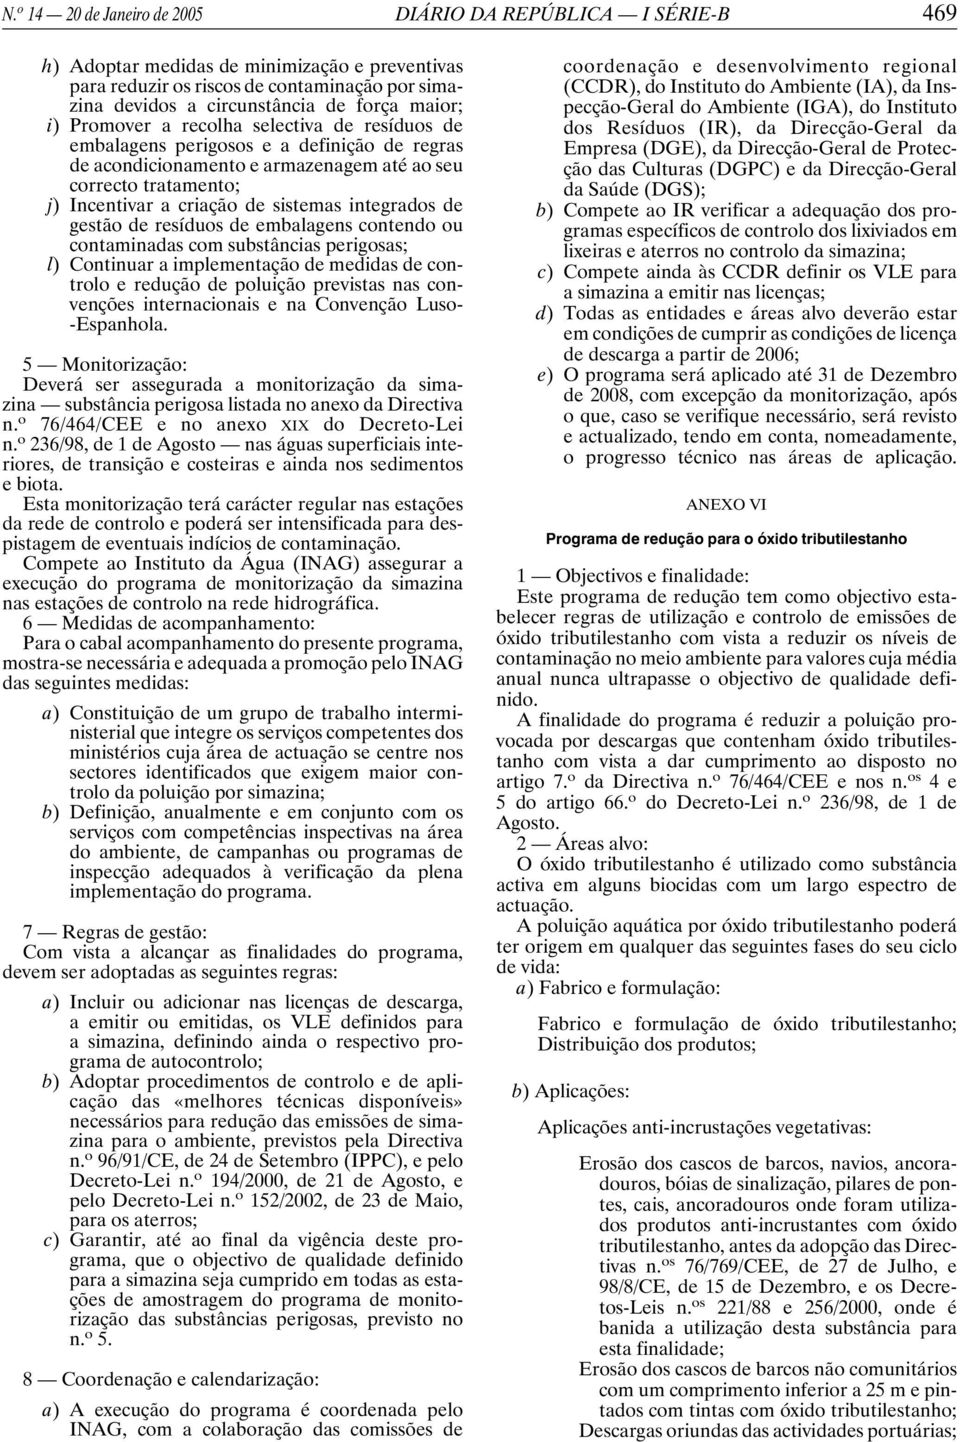 simazina substância perigosa listada no anexo da Directiva n. o 76/464/CEE e no anexo XIX do Decreto-Lei n.